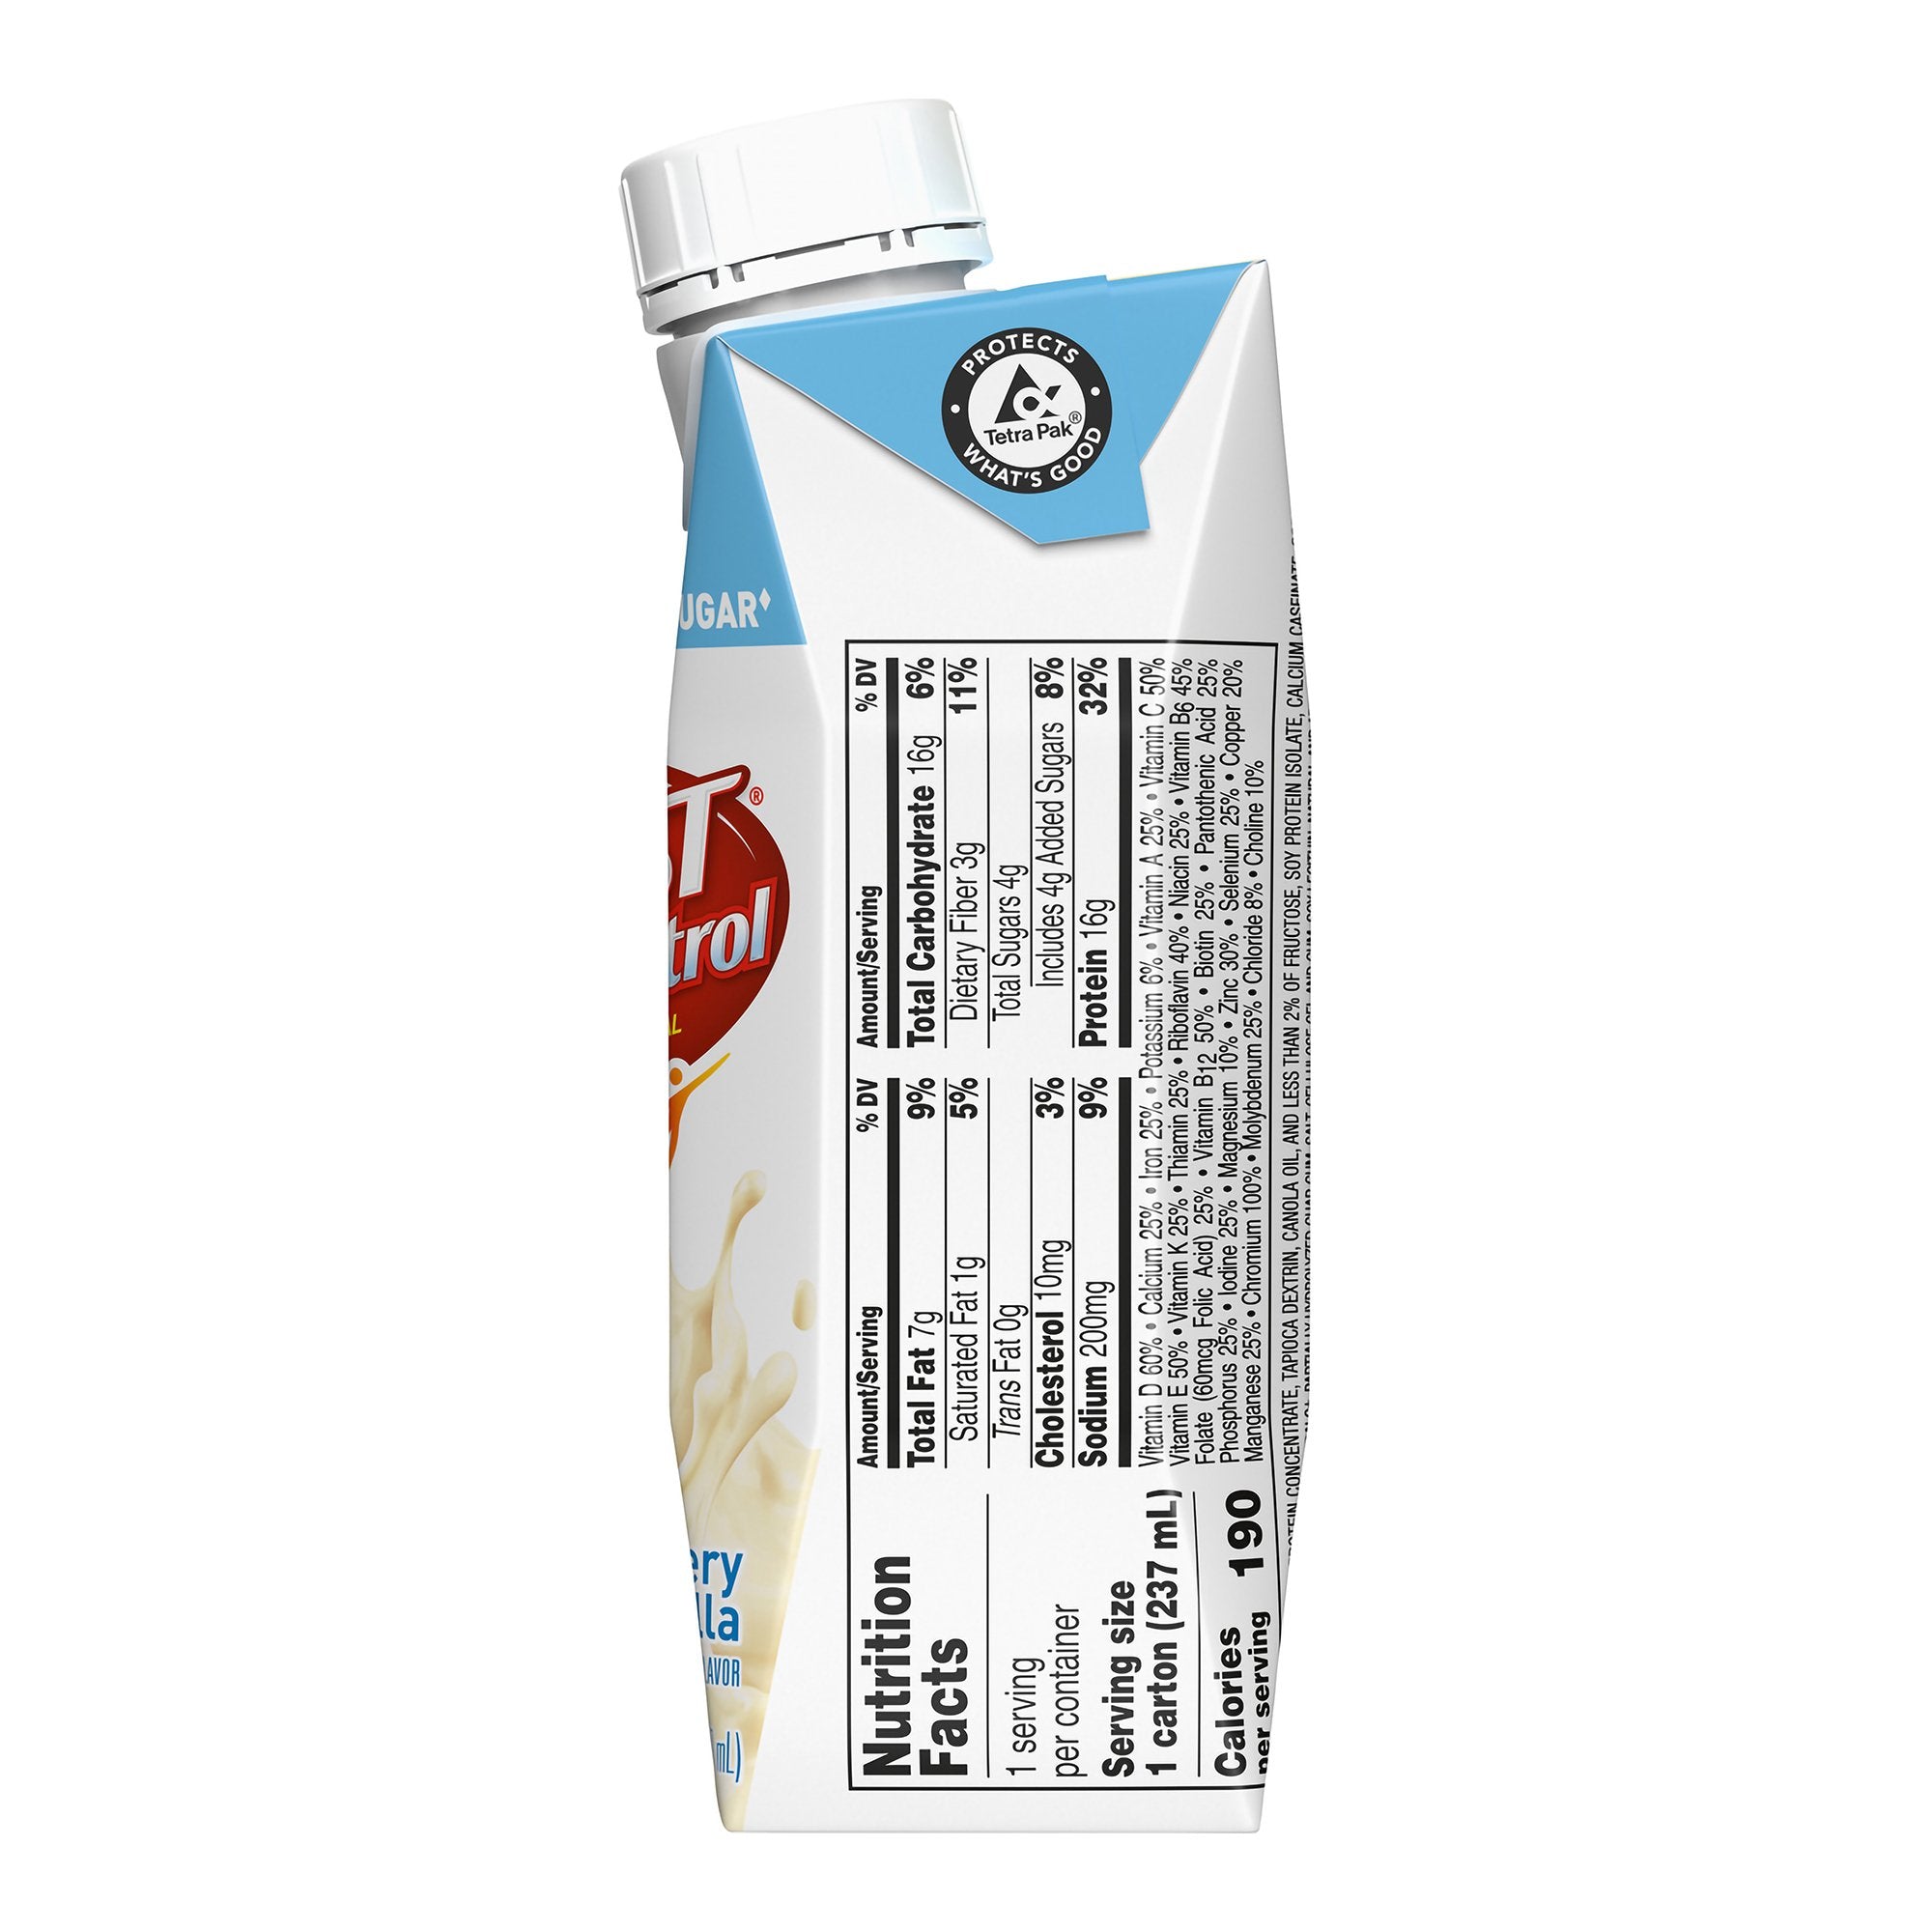 Oral Supplement Boost Glucose Control Very Vanilla Flavor Liquid 8 oz. Carton